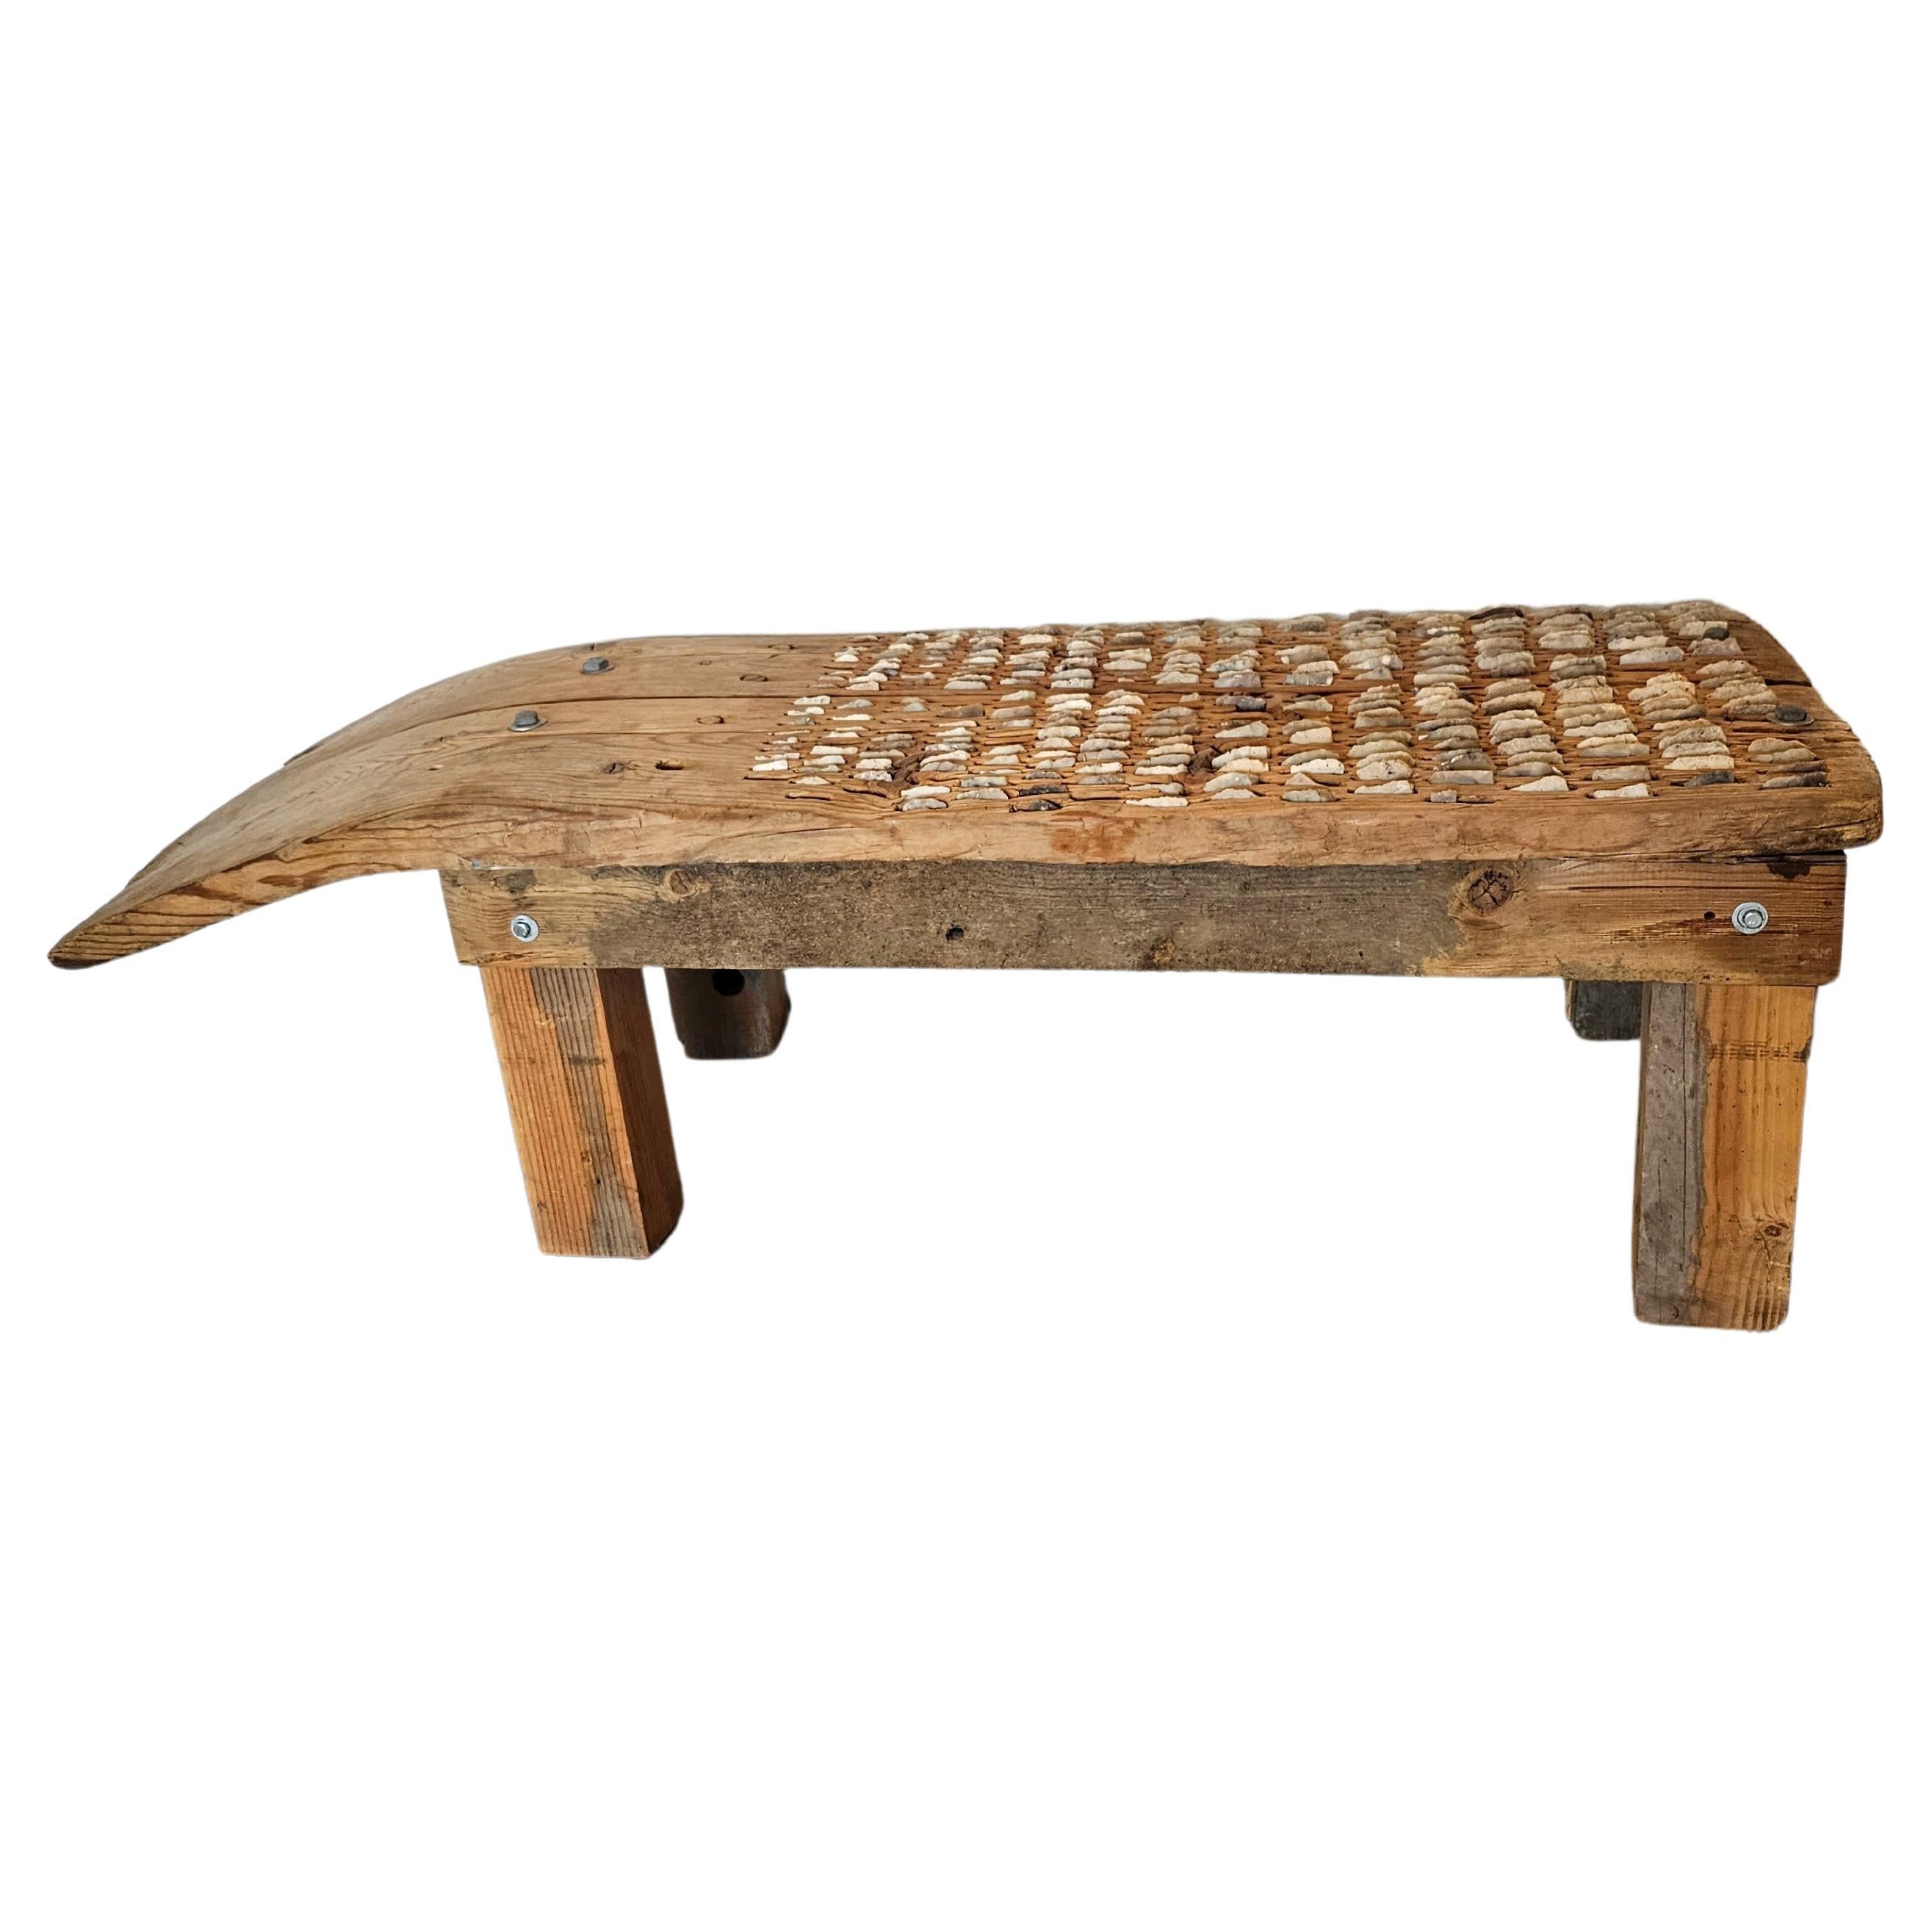 Antique Mediterranean Farm Threshing Board Primitve Tribulum Bench or Table For Sale